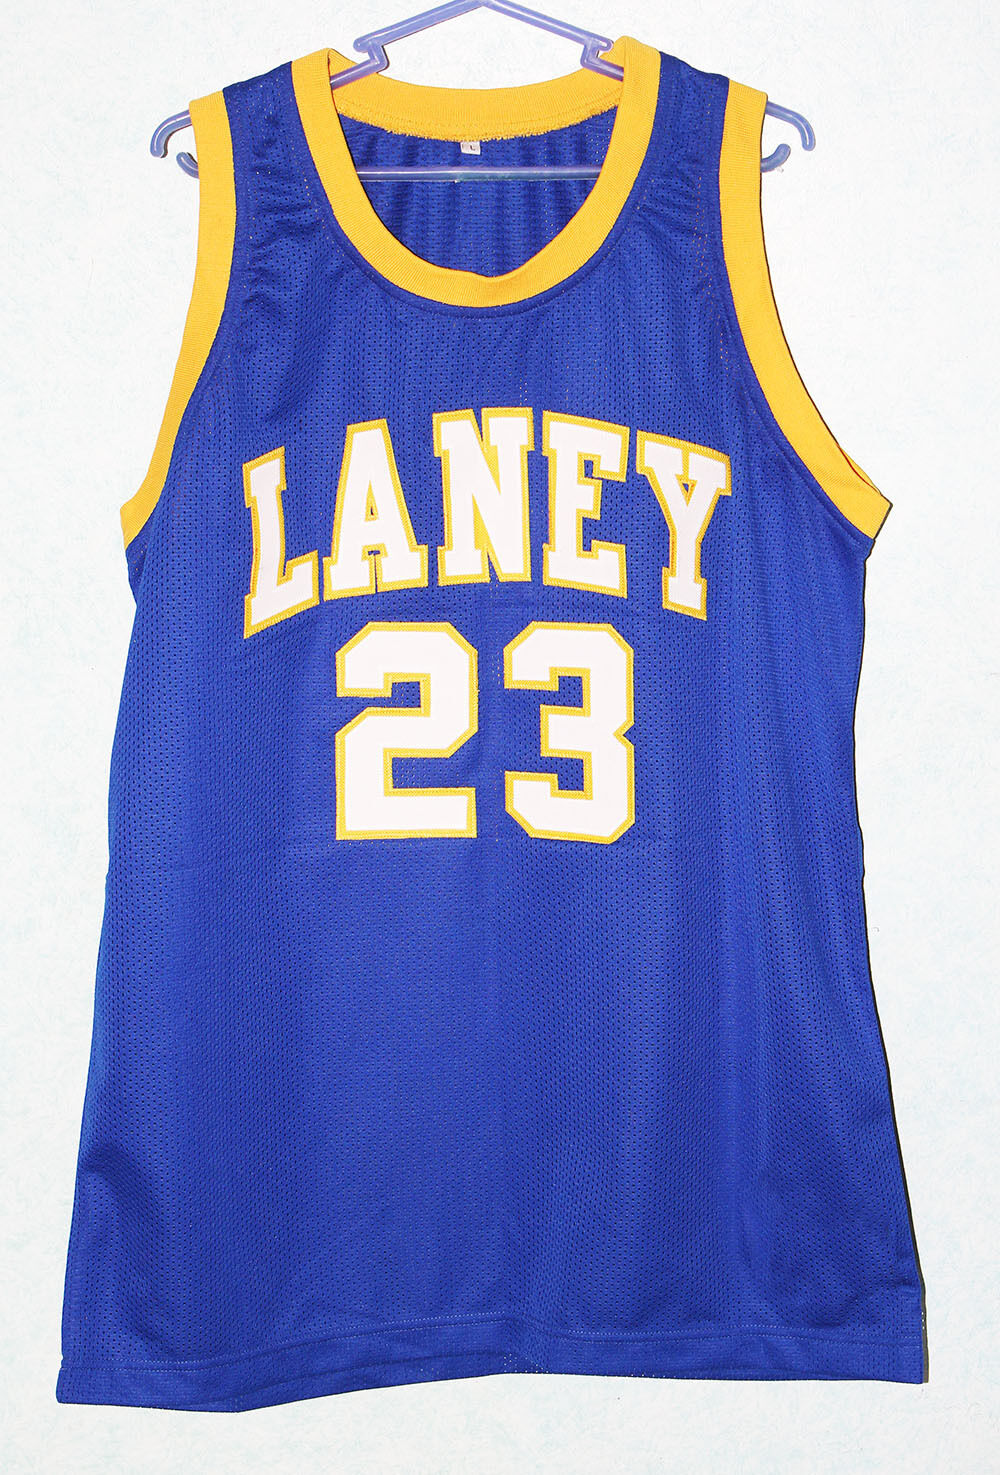 laney 23 jersey